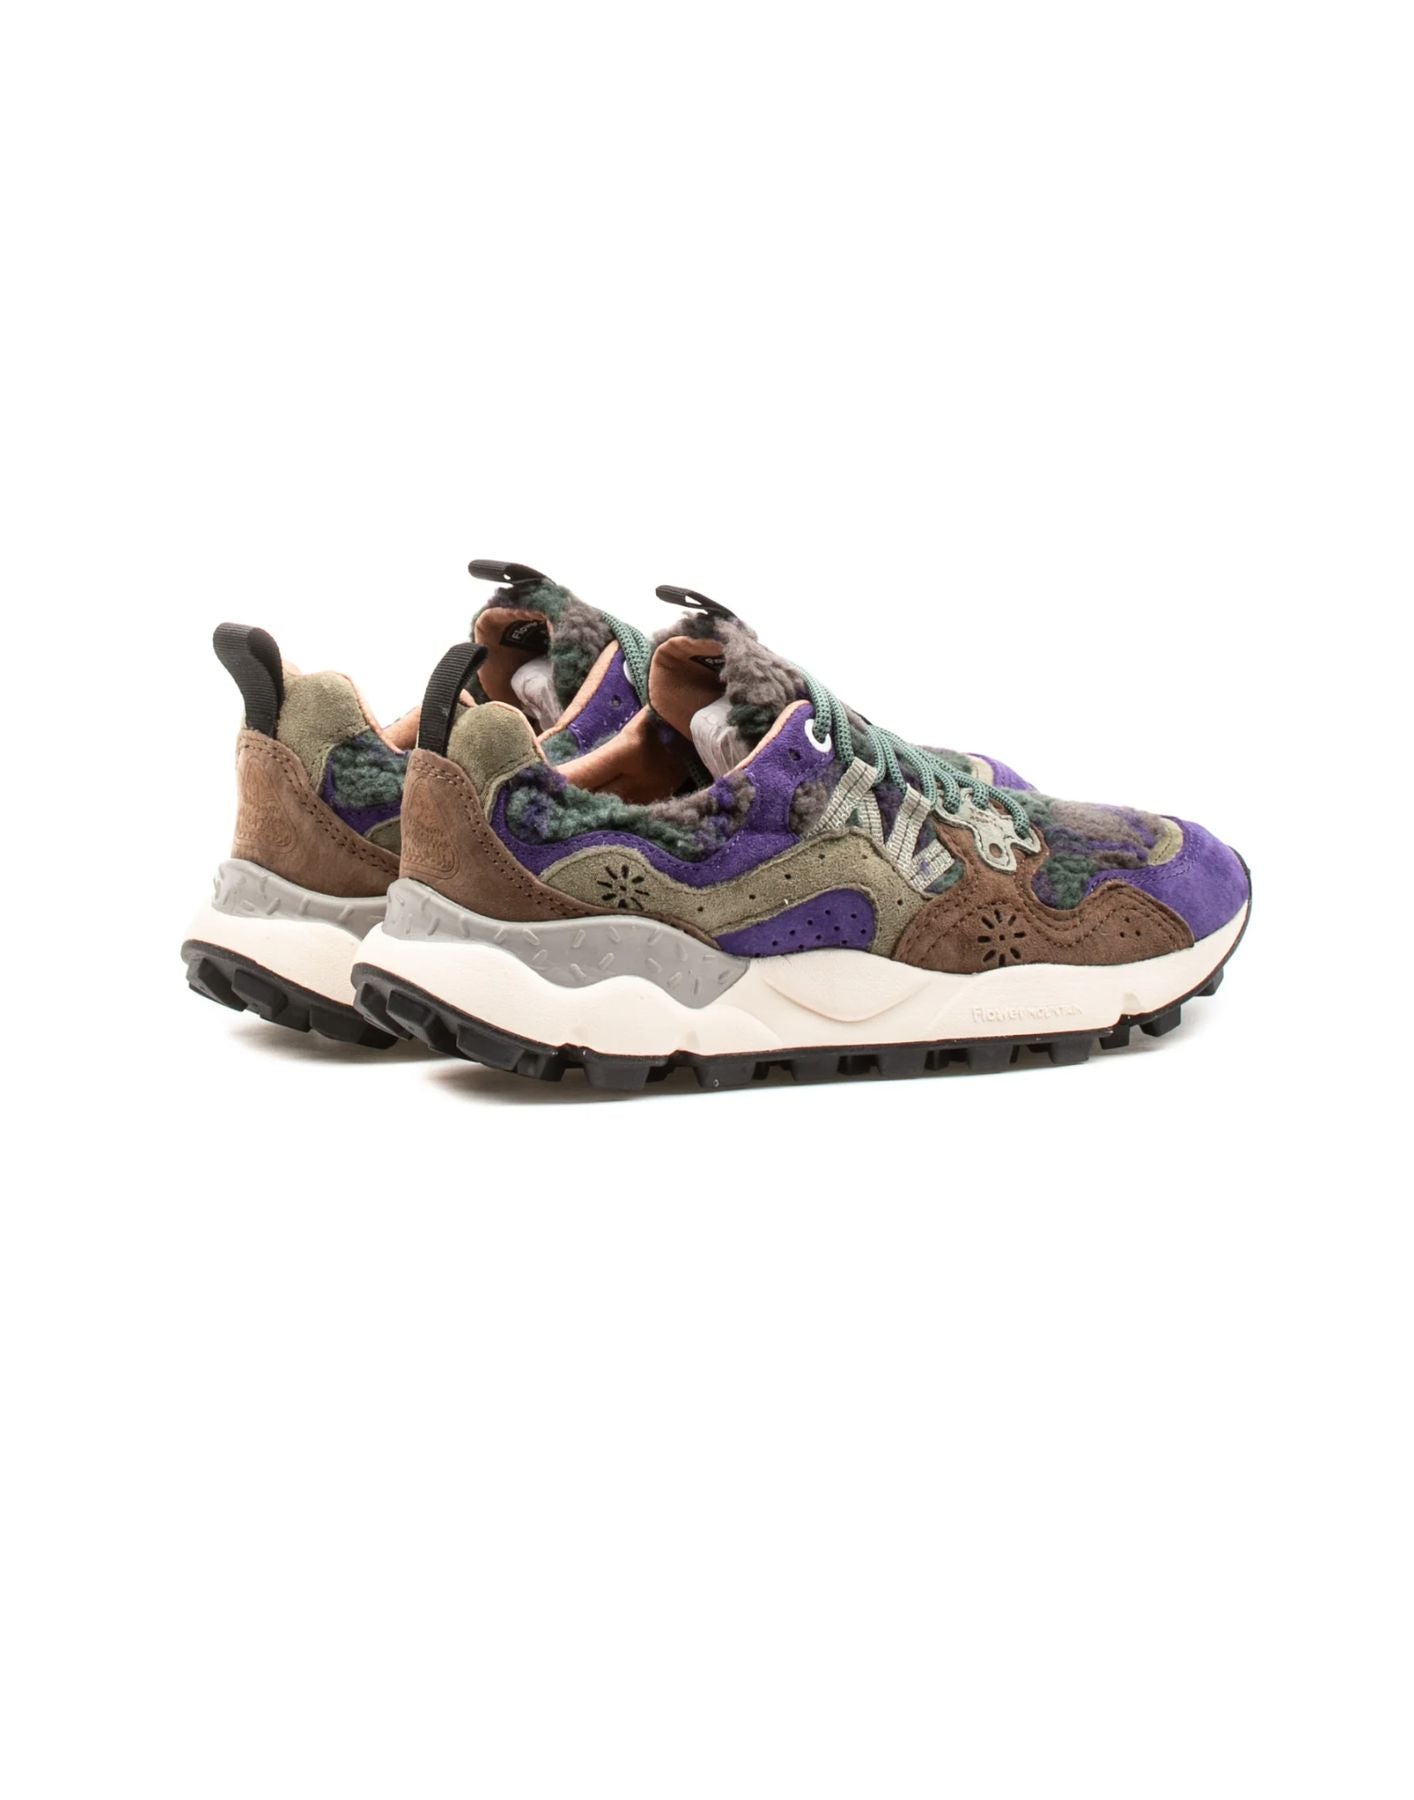 Chaussures pour femme yamano 3 uni violet brun Flower Mountain